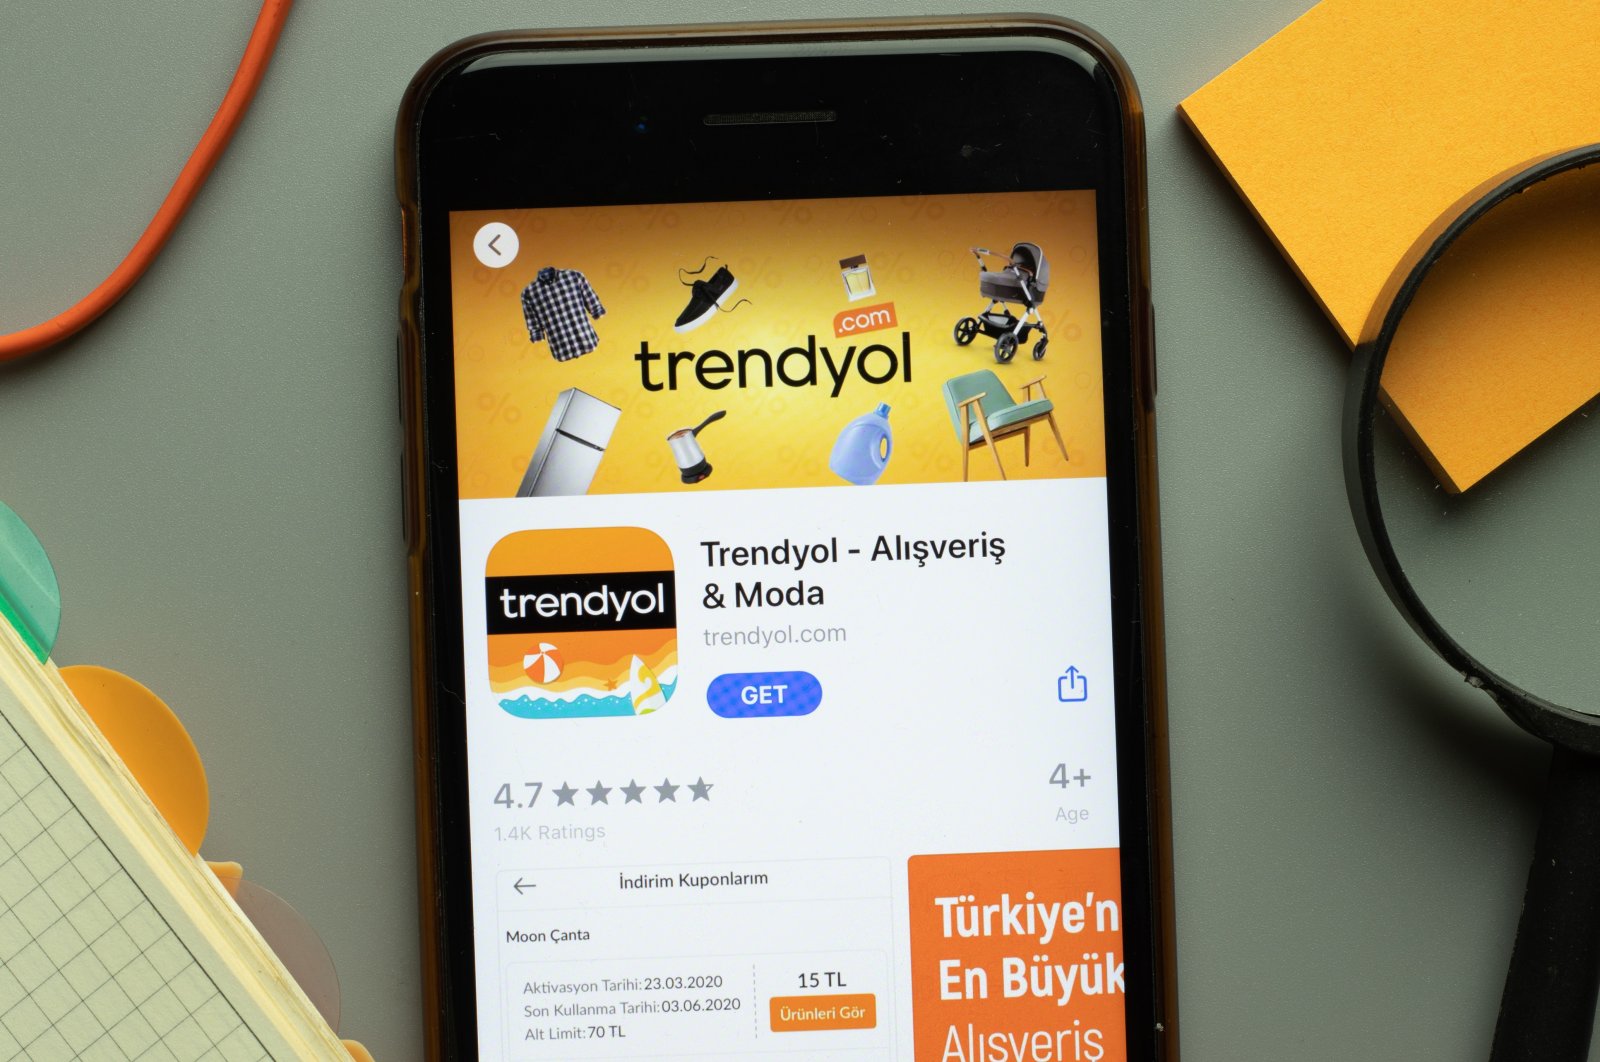 Trendyol mobile app logo seen on a phone screen, New York, the U.S., Oct. 26, 2020. (Shutterstock Photo)